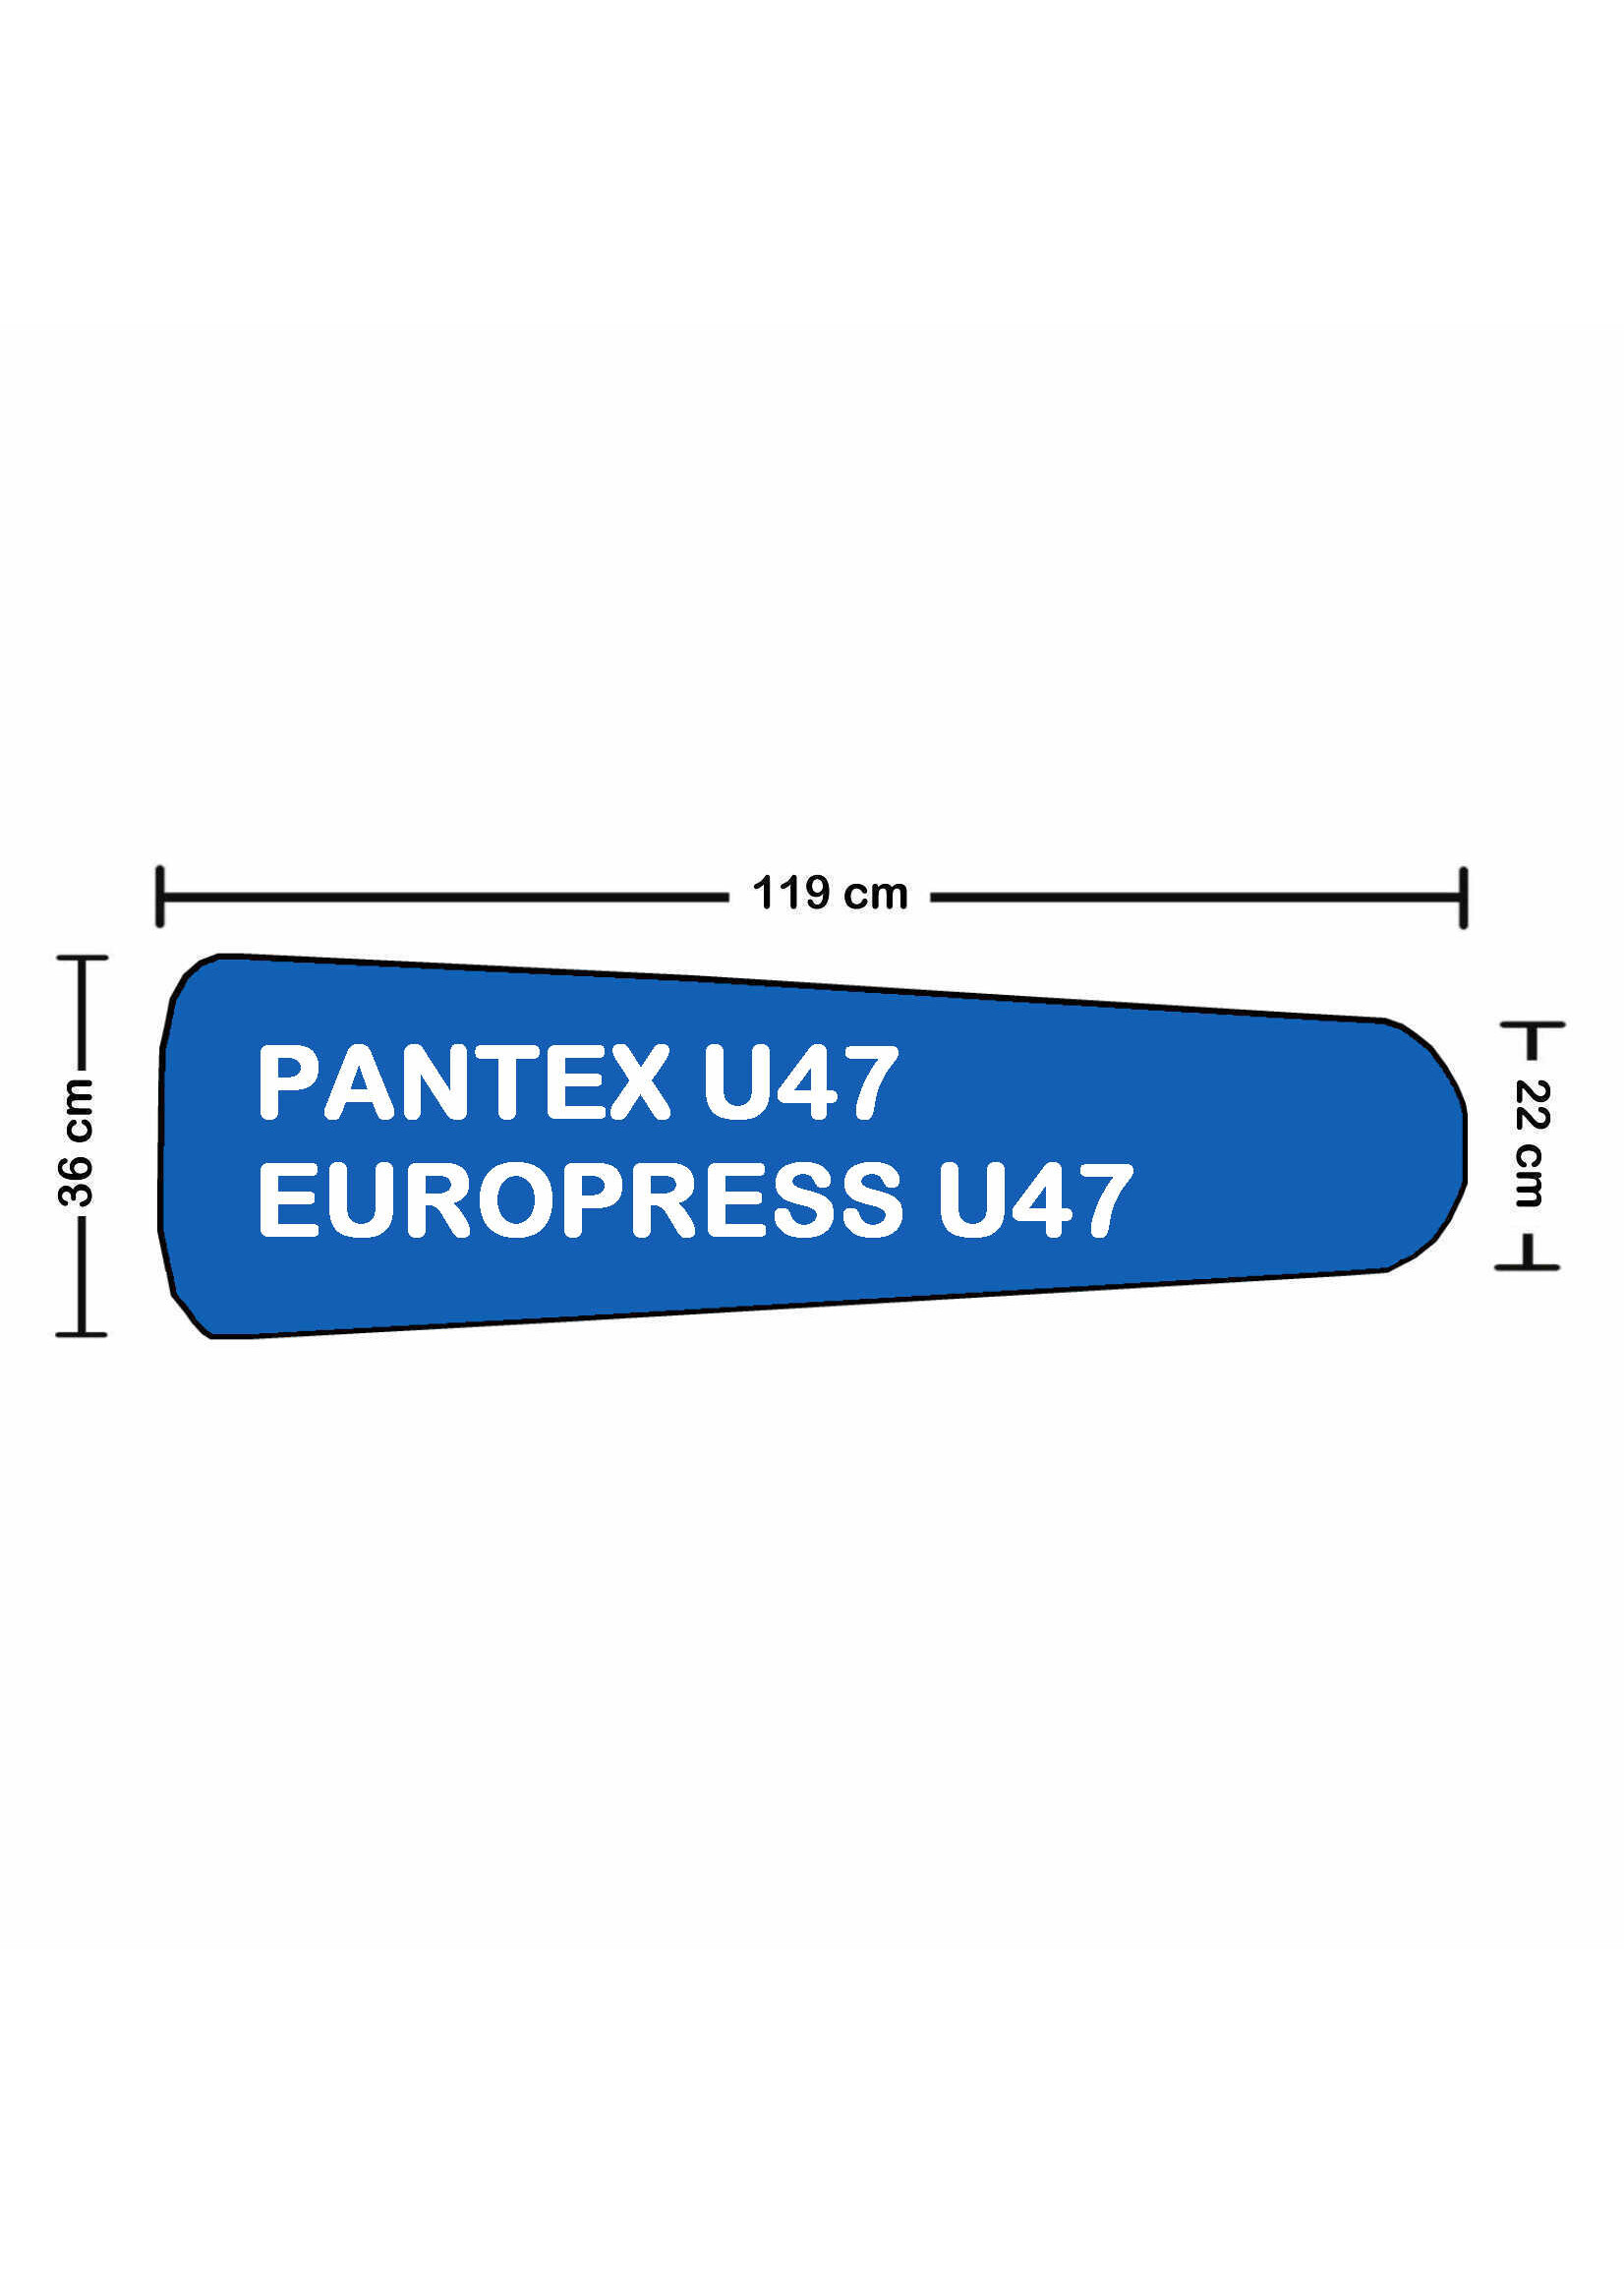 Solana PANTEX/EUROPRESS U47 cover Budget version